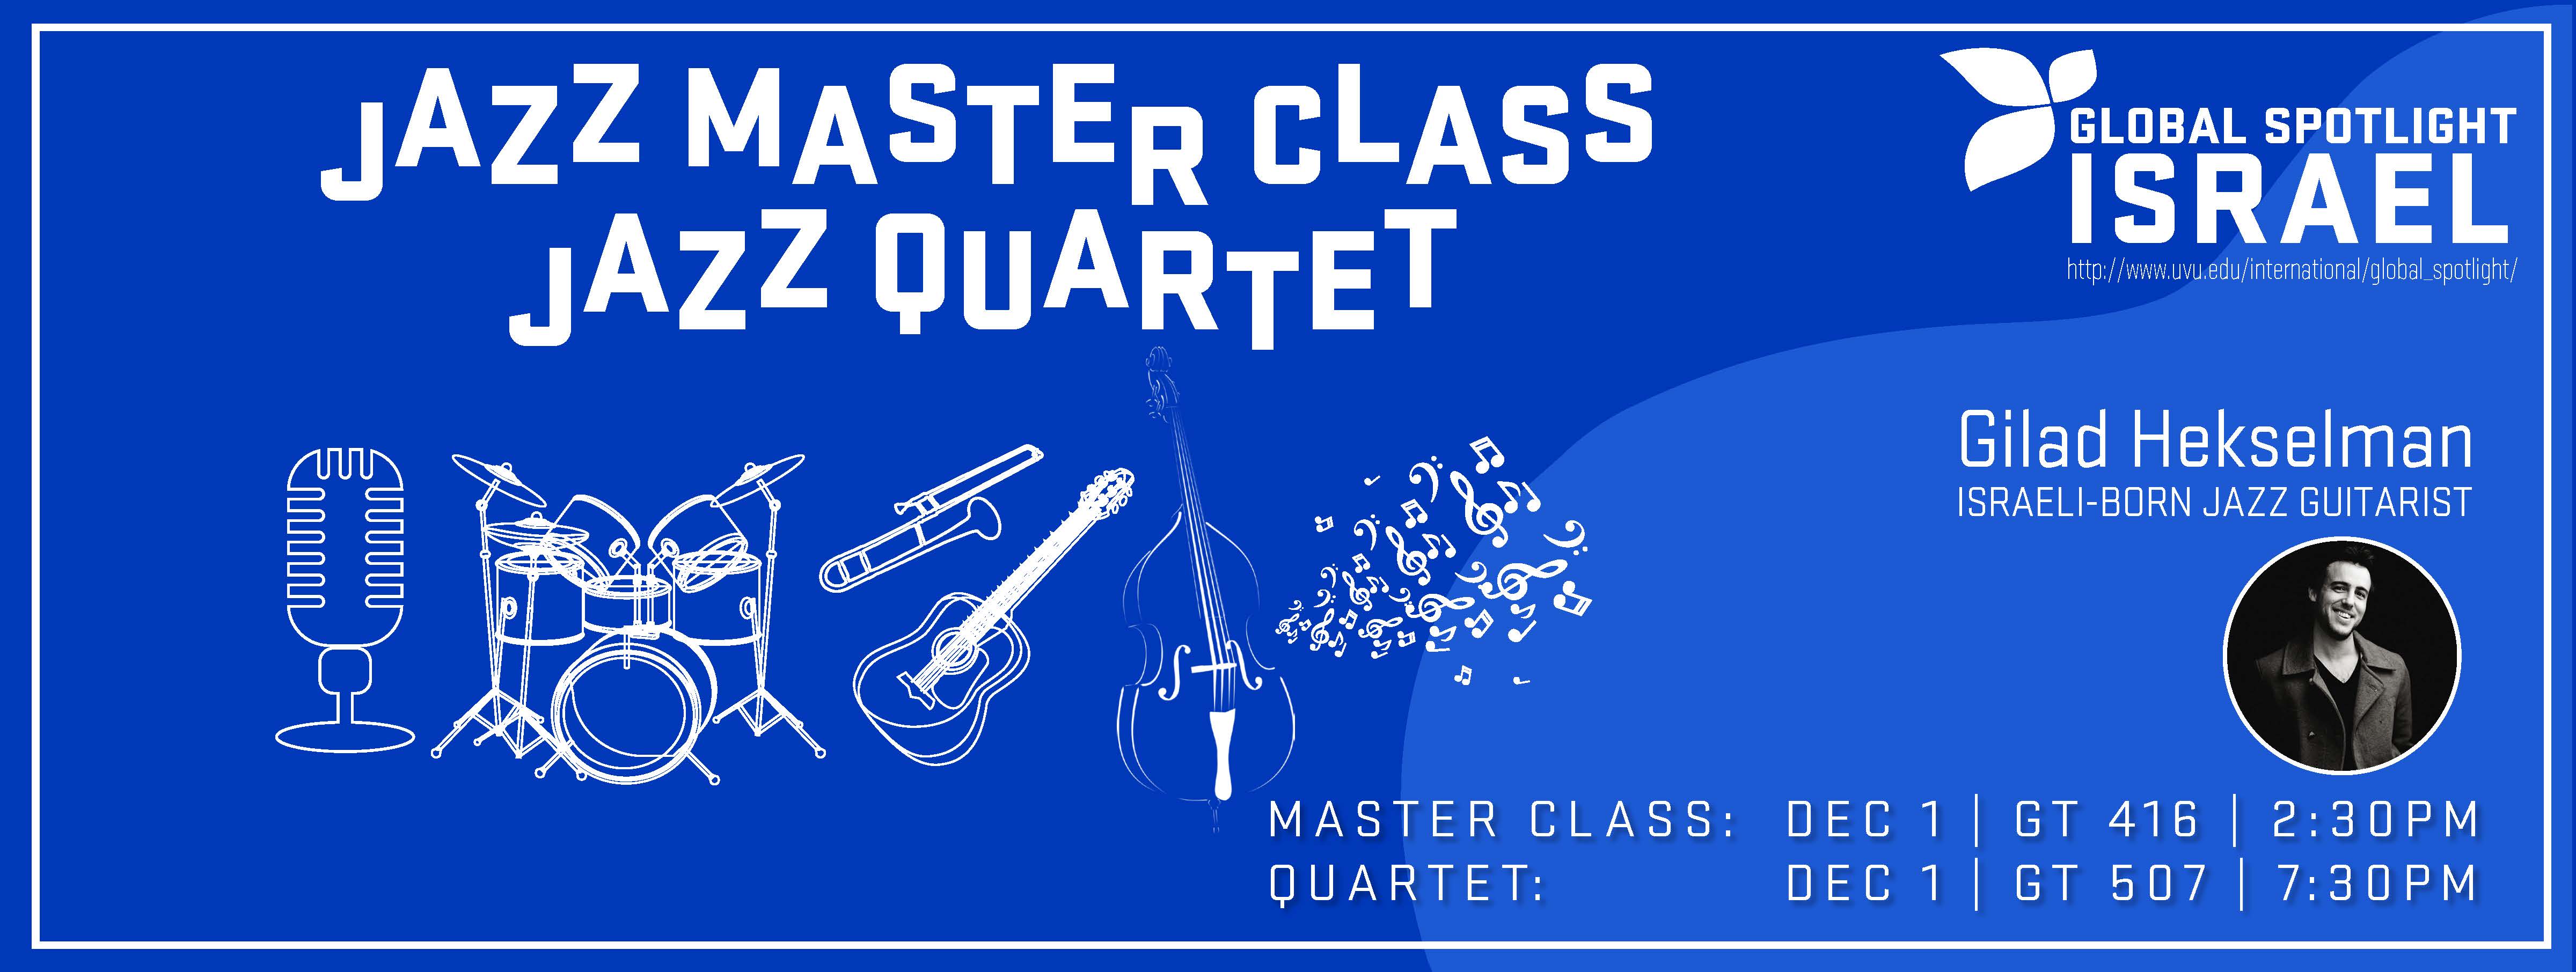 Jazz Master Class Jazz Quartet